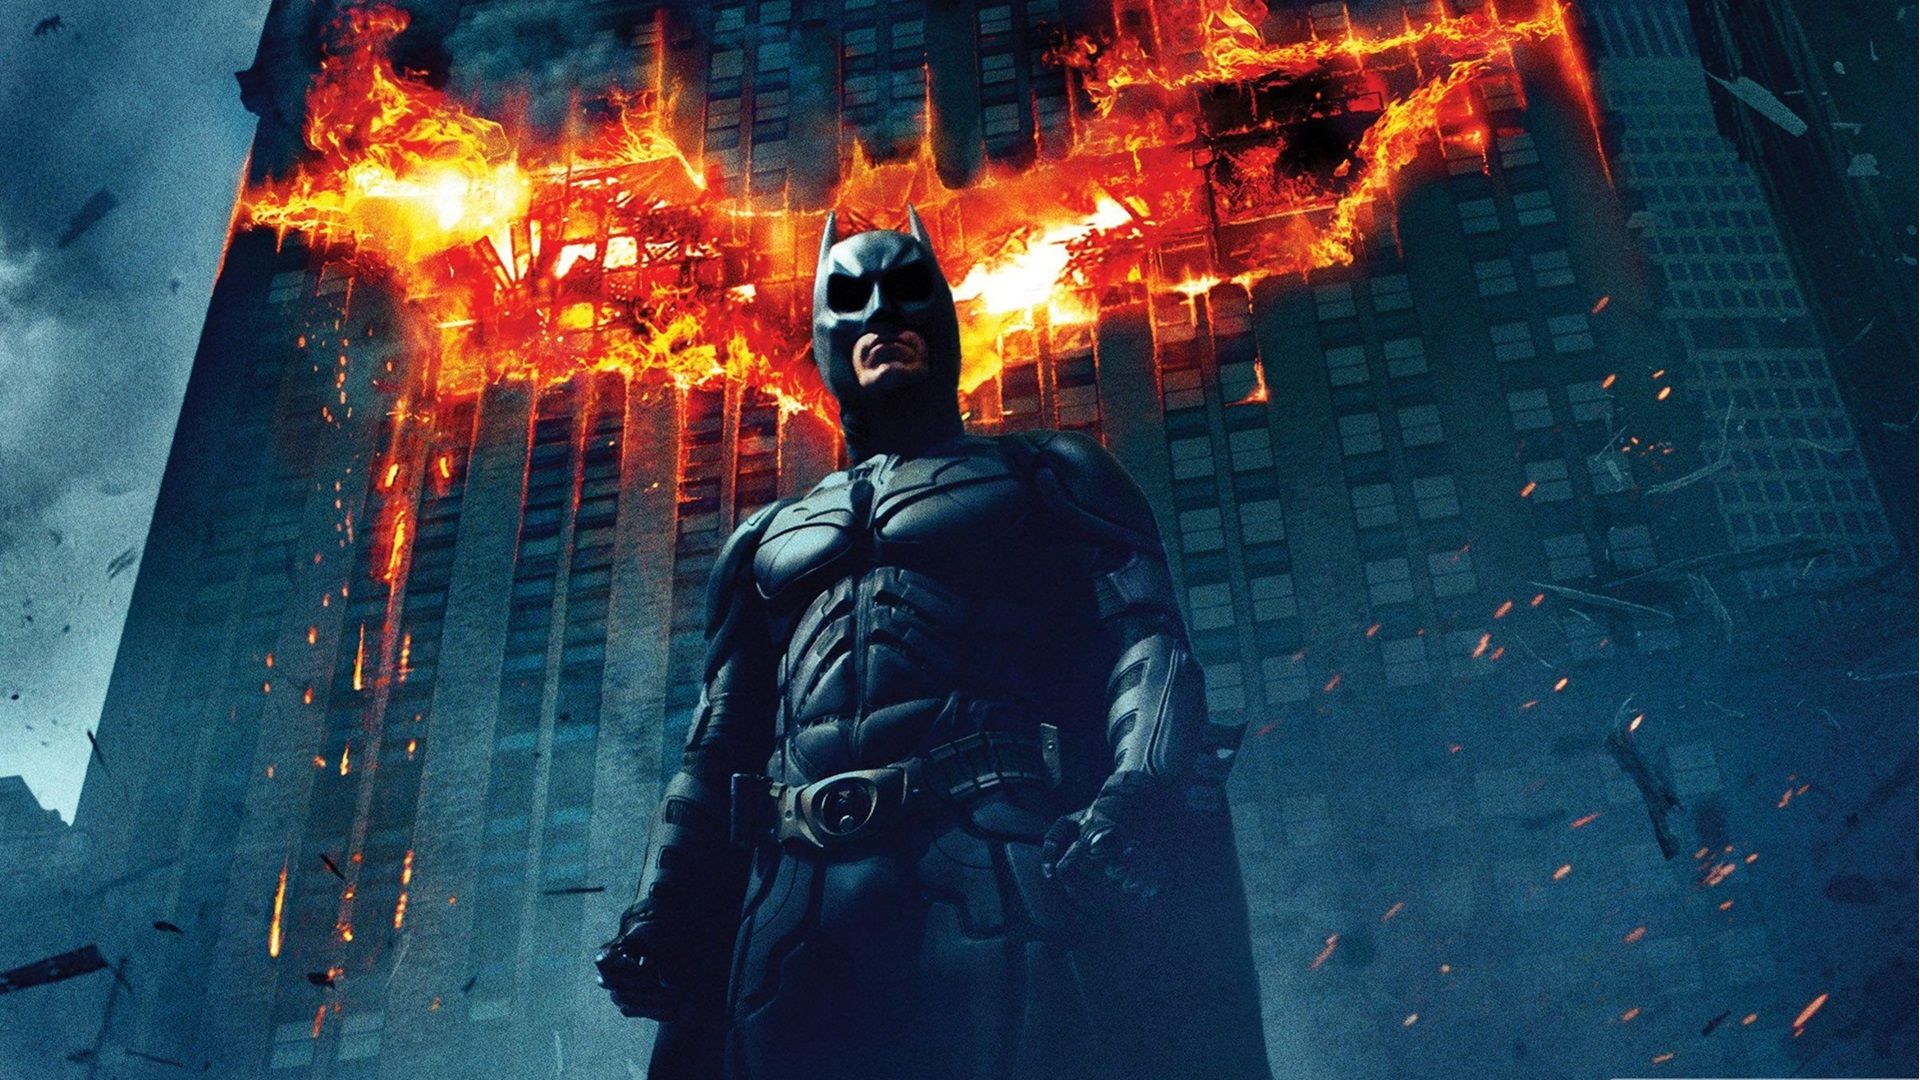 Batman in front of a flaming symbol.